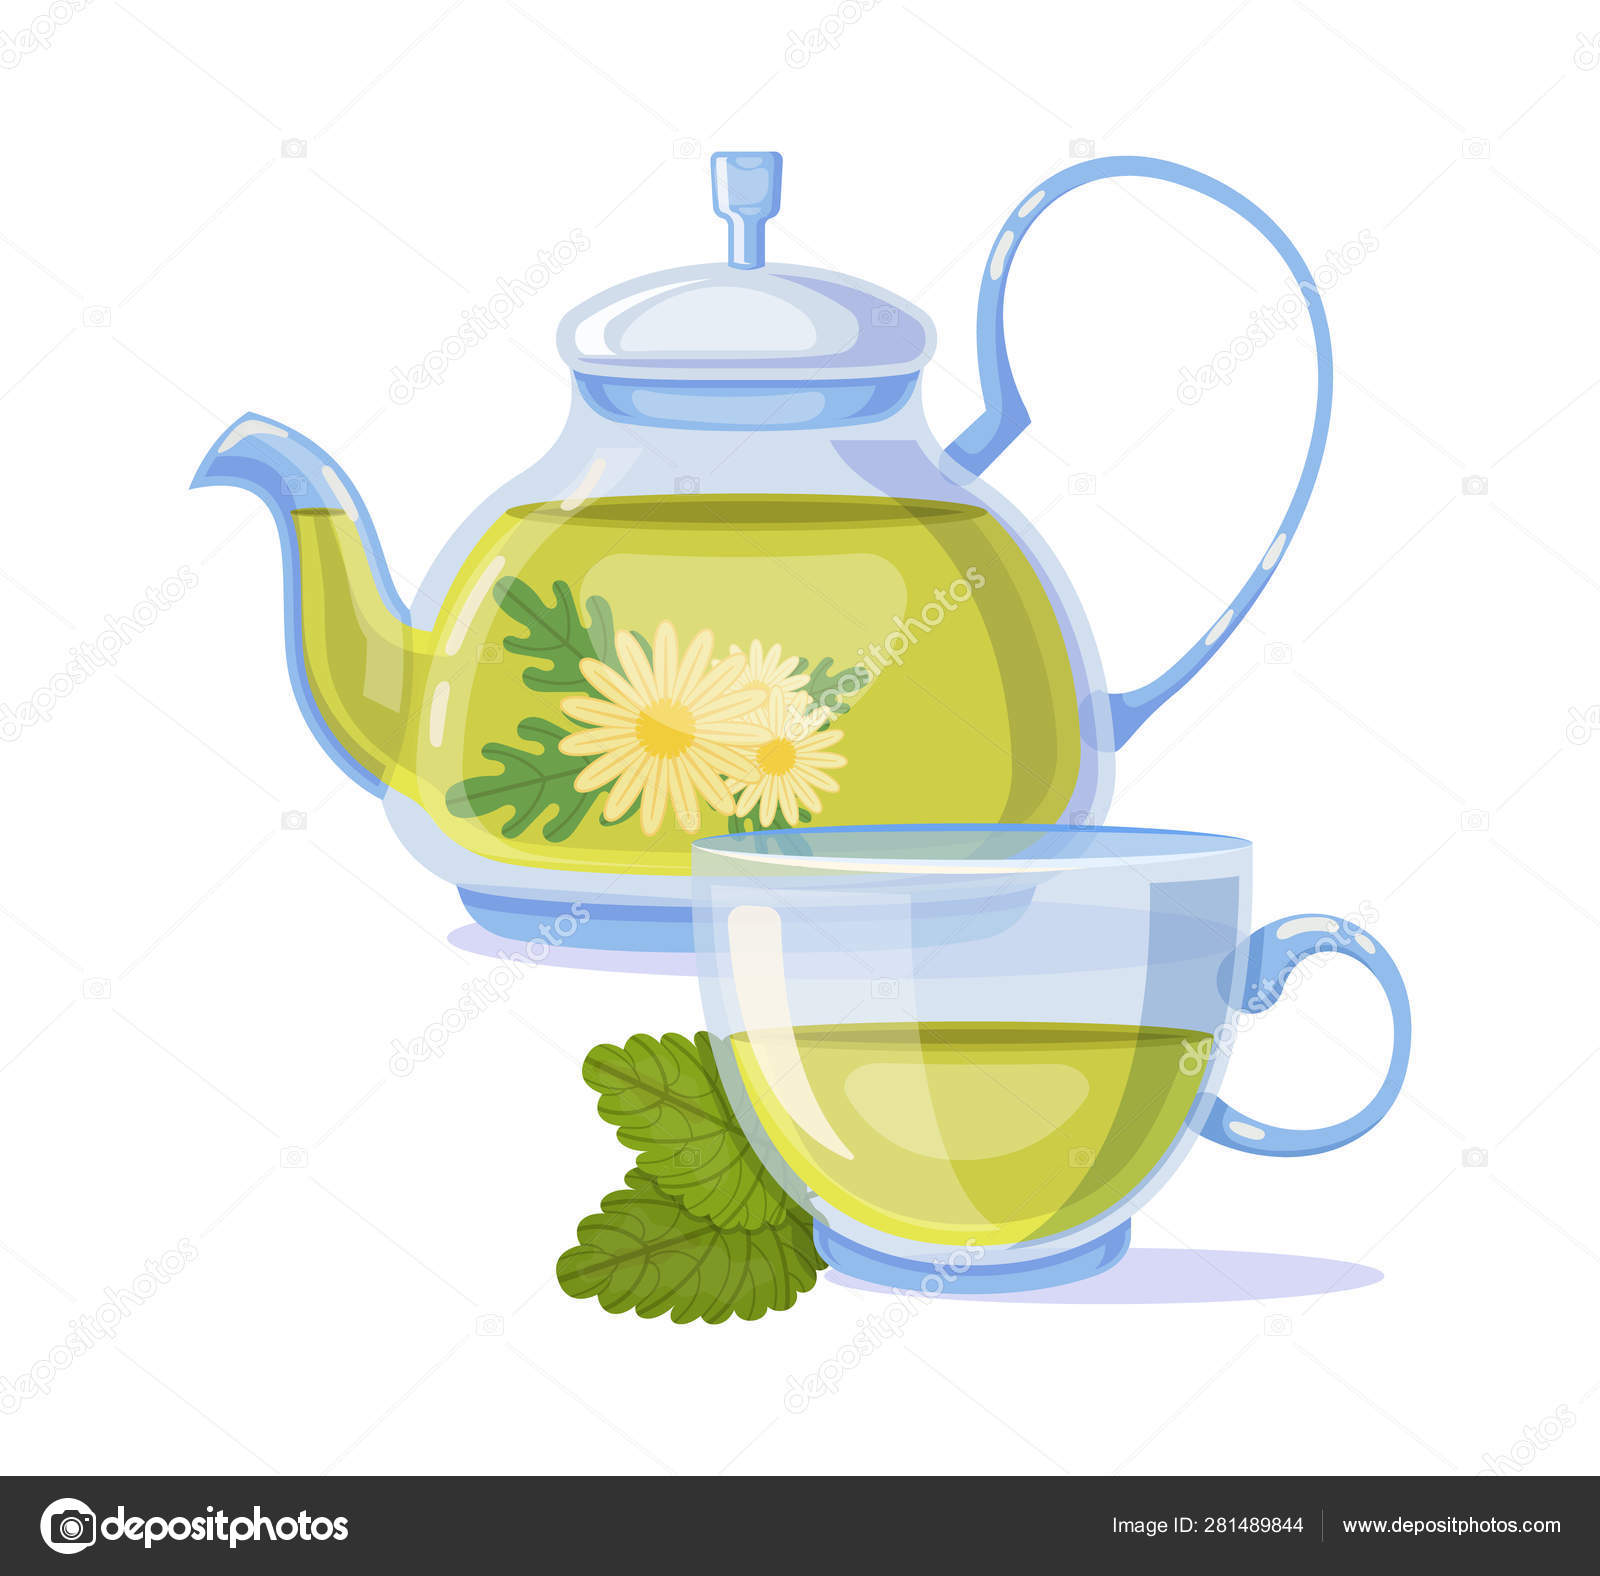 Realistic ceramic ware kettle for making tea milk Vector Image